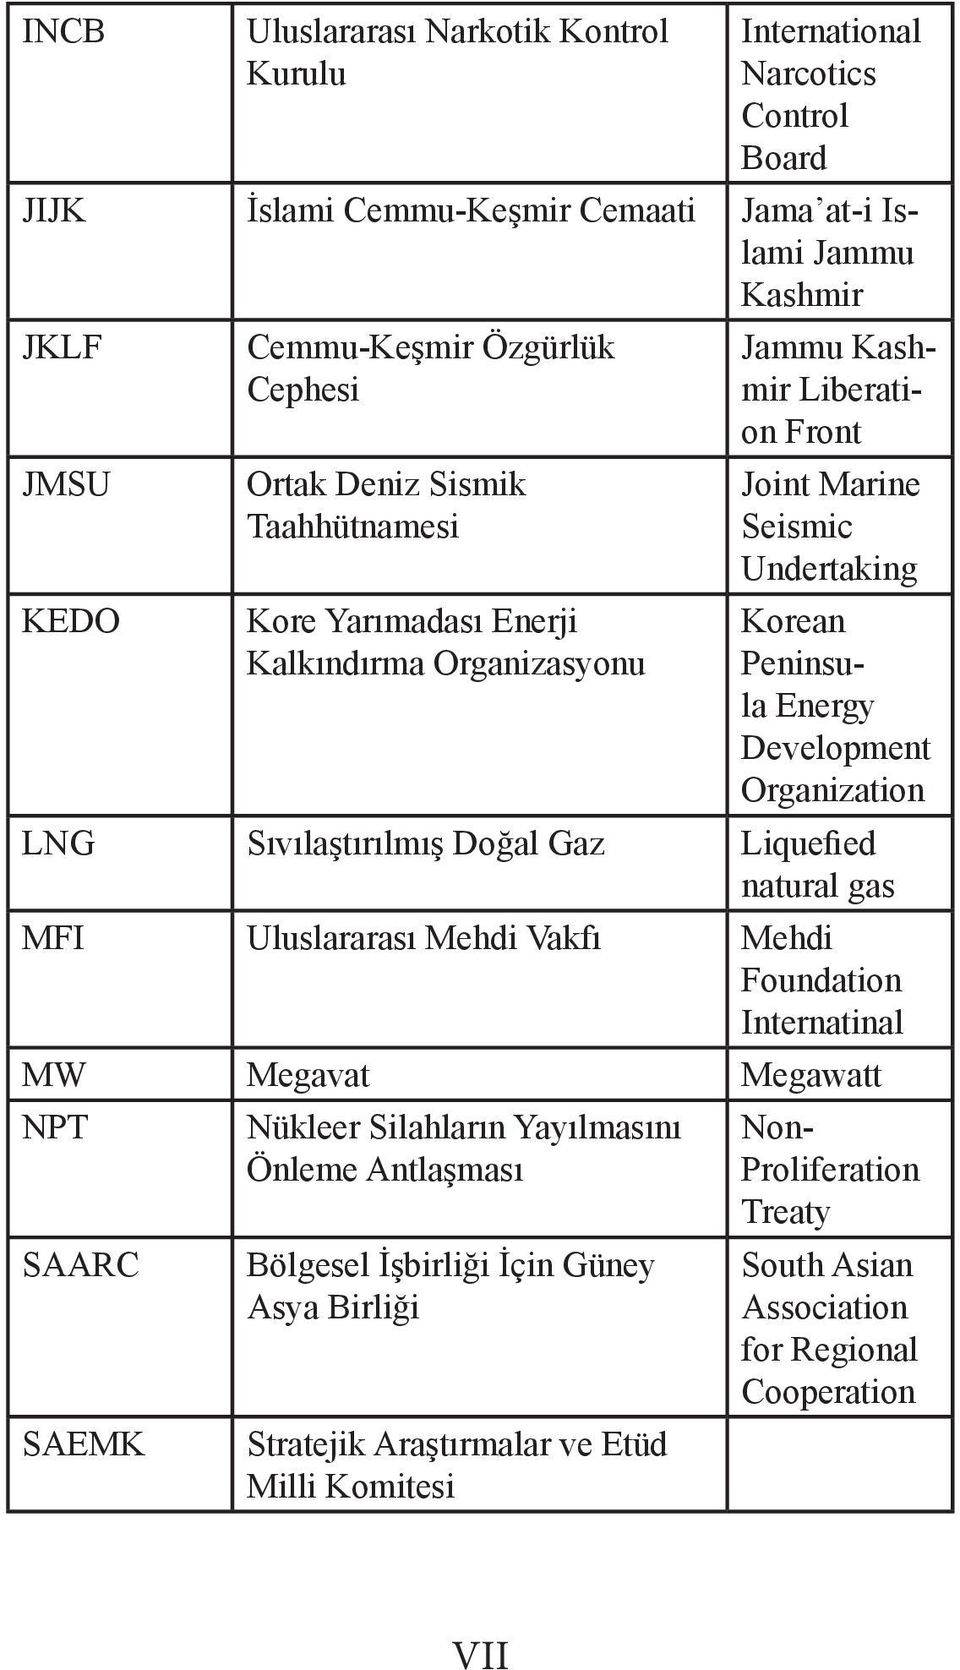 Development Organization LNG Sıvılaştırılmış Doğal Gaz Liquefied natural gas MFI Uluslararası Mehdi Vakfı Mehdi Foundation Internatinal MW Megavat Megawatt NPT SAARC SAEMK Nükleer